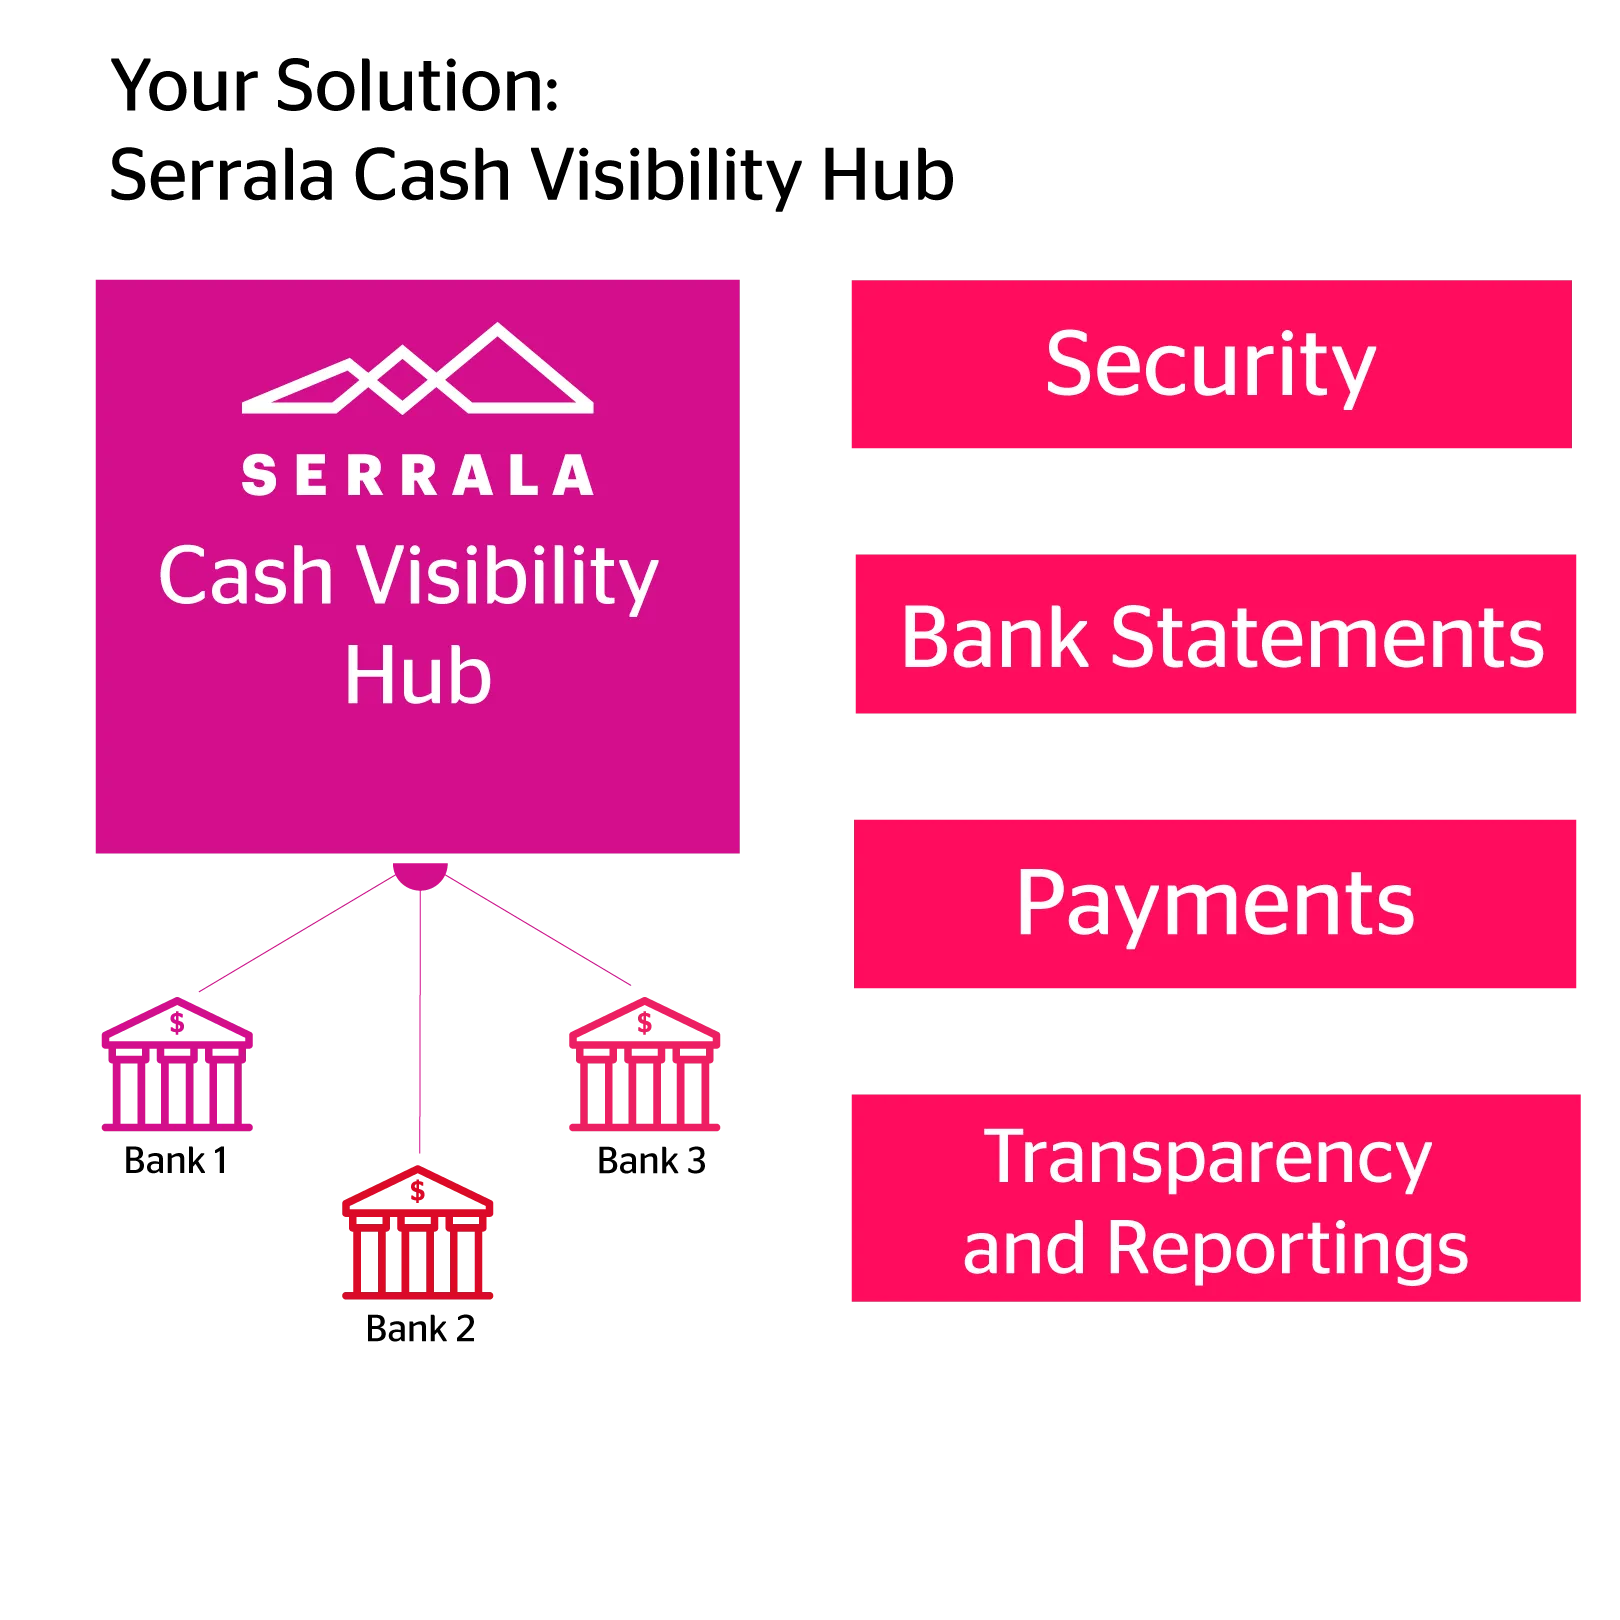 Cash Visibility Hub